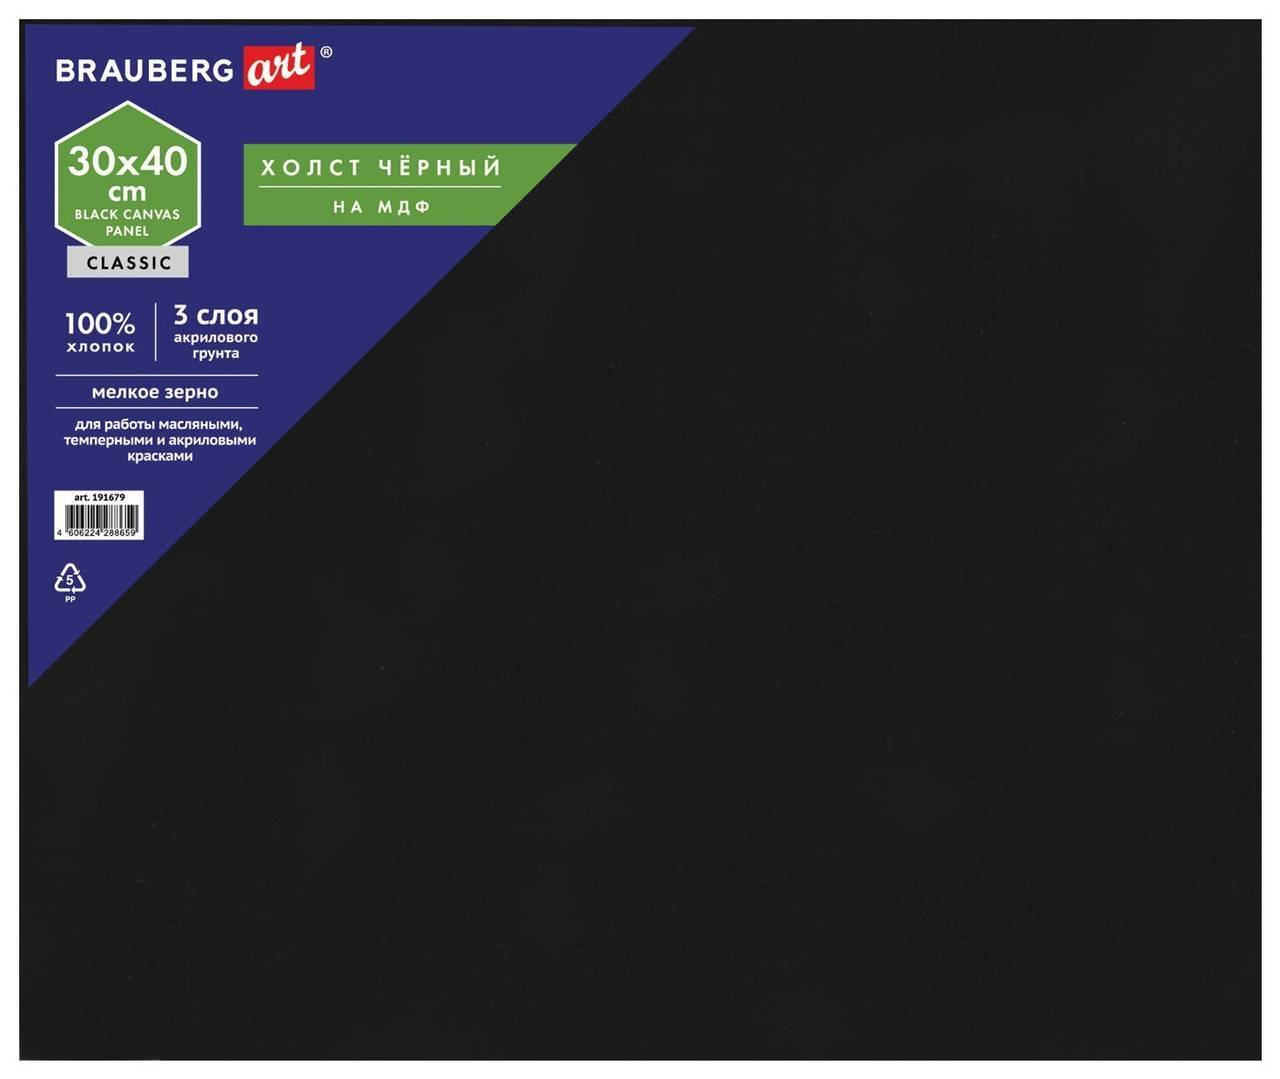 Холст черный на картоне (Мдф), 30х40 см, грунт, хлопок, мелкое зерно, Brauberg ART Classic, 191679 Brauberg